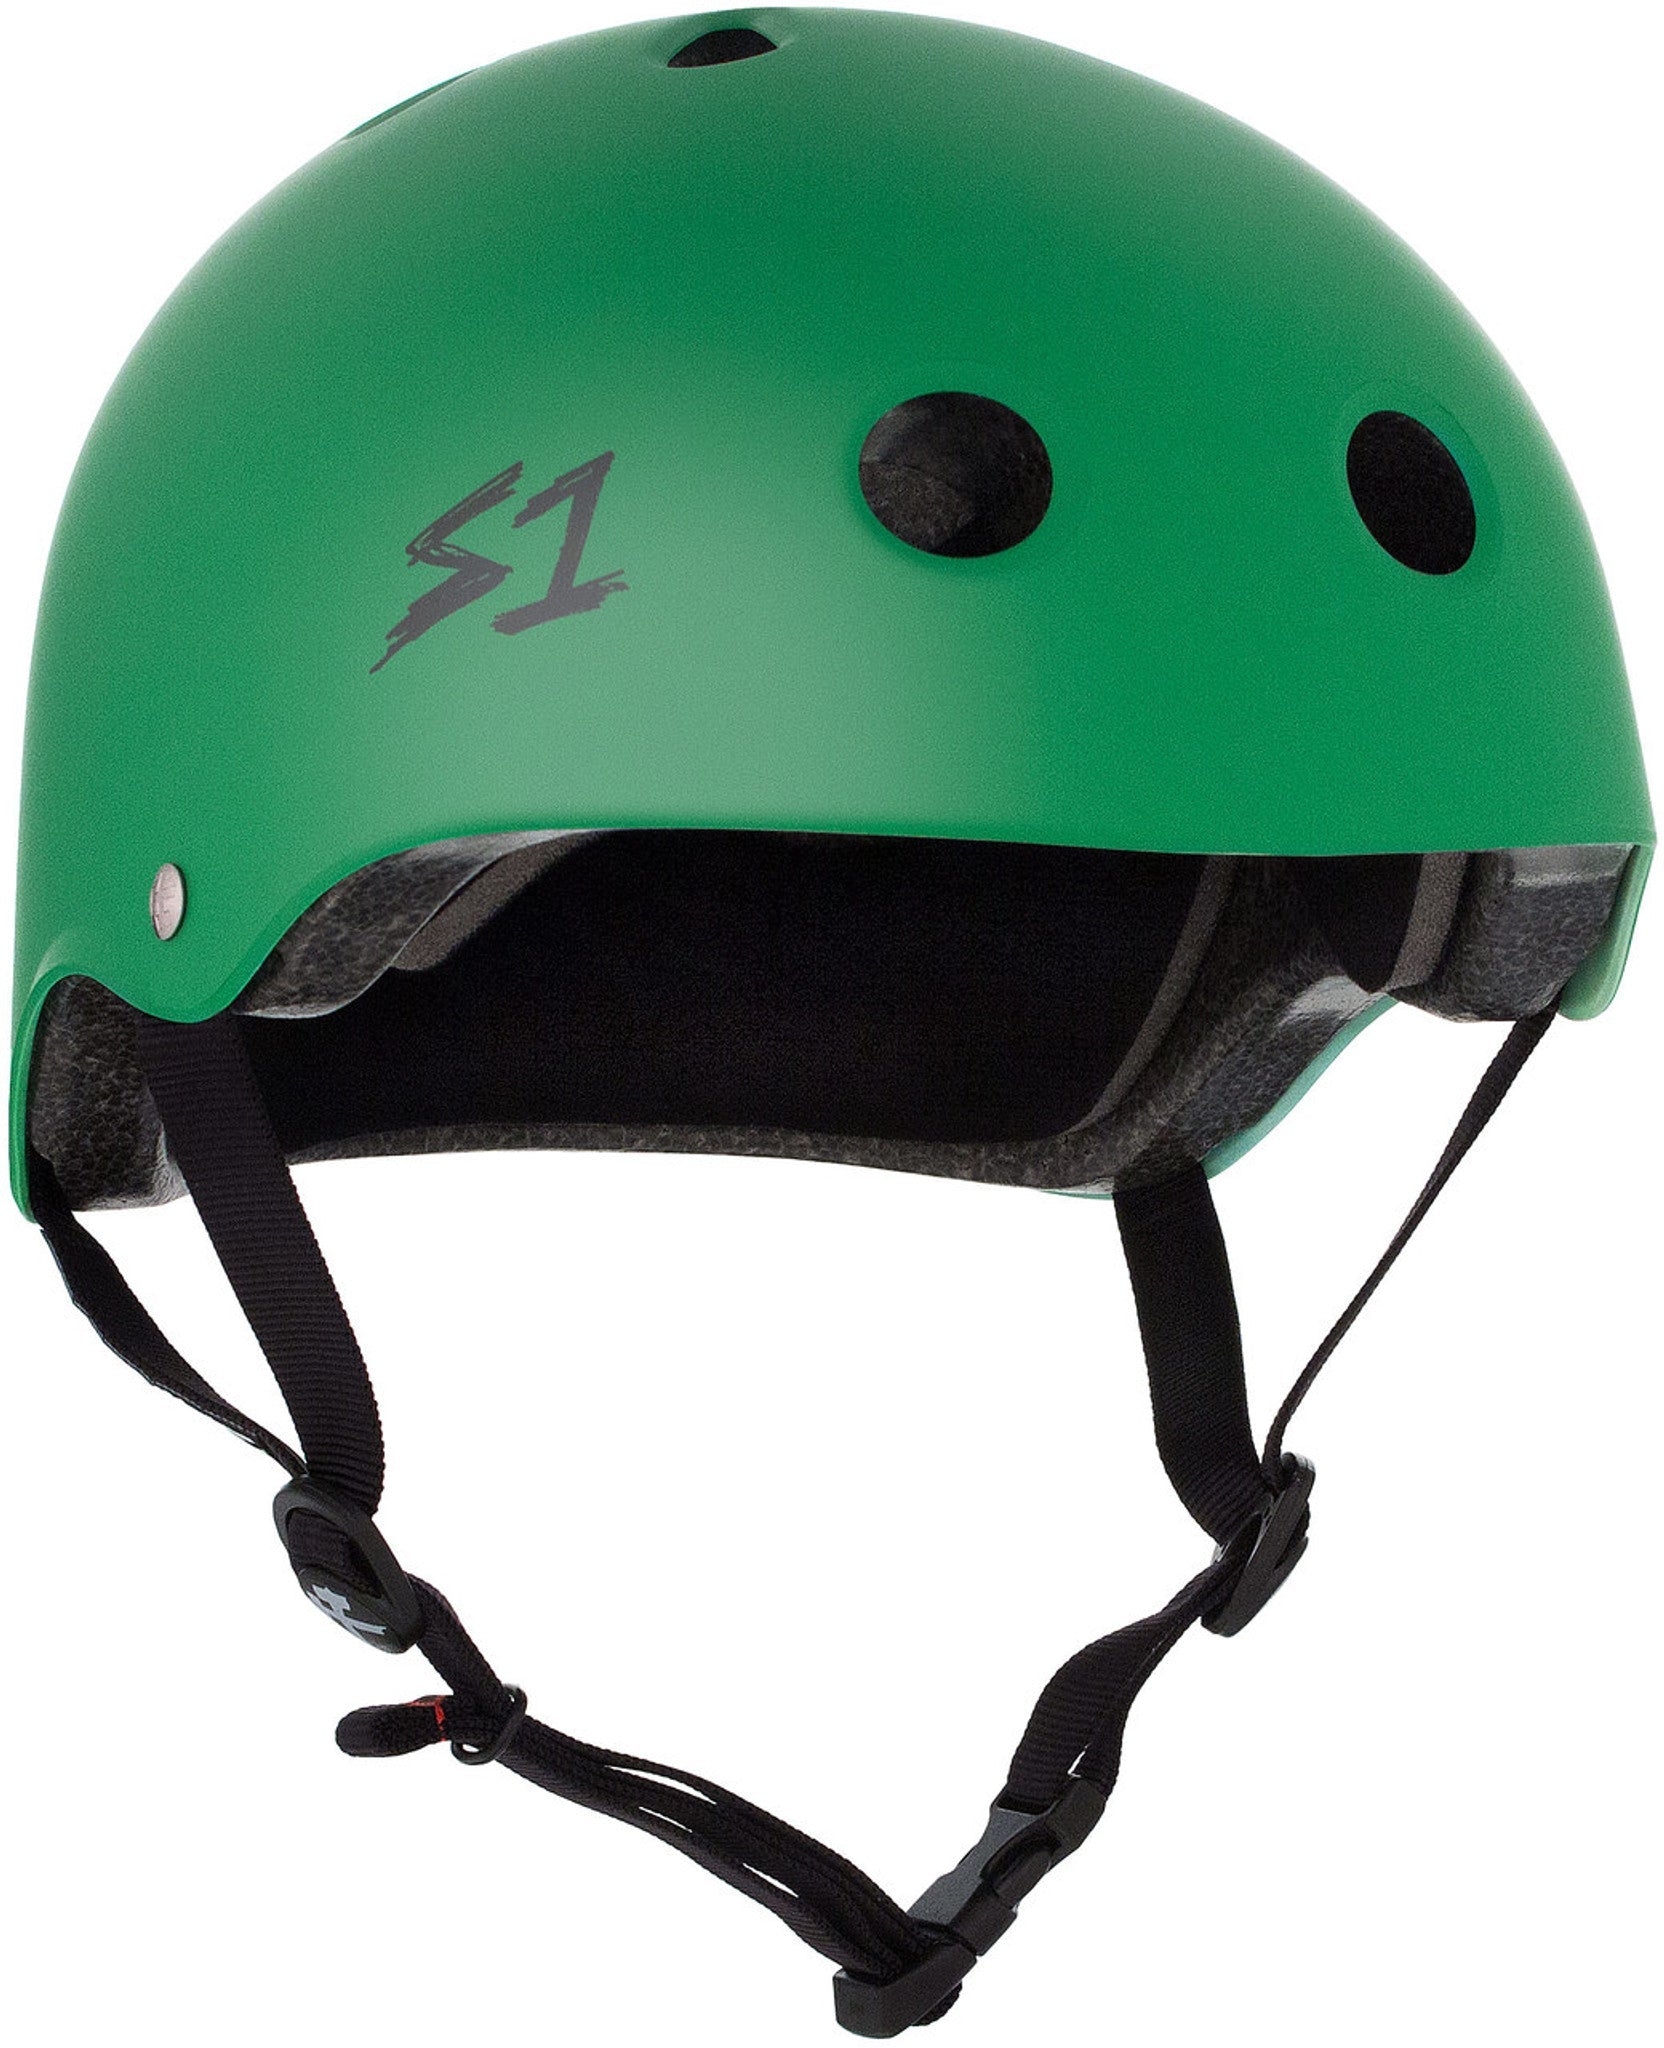 S1: Lifer Helmet (Kelly Green Matte) - MUIRSKATE